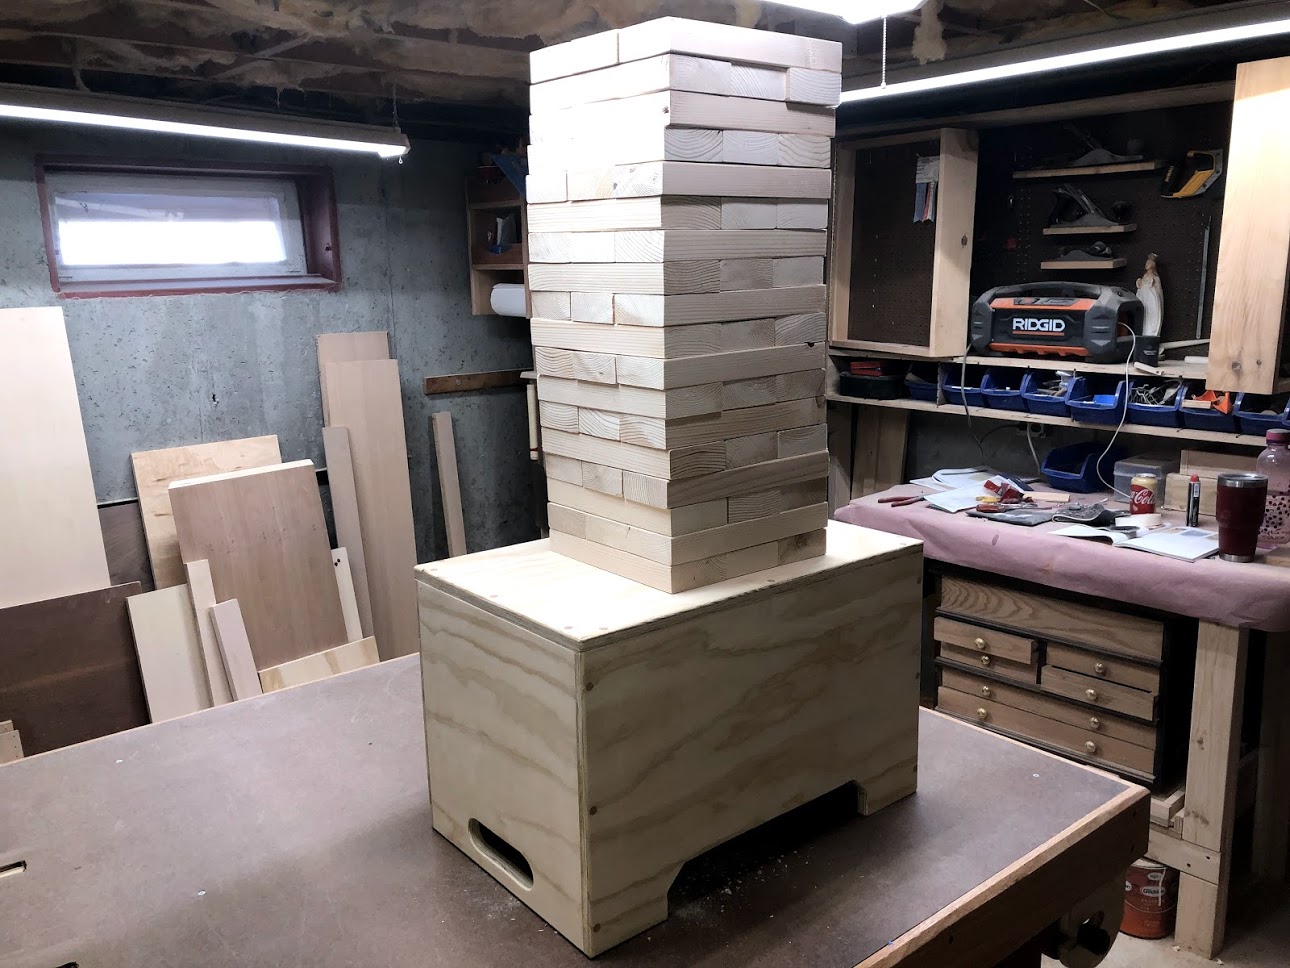 Hand Made Wooden Jenga Game Set, Blocks and Case Wood NICE!